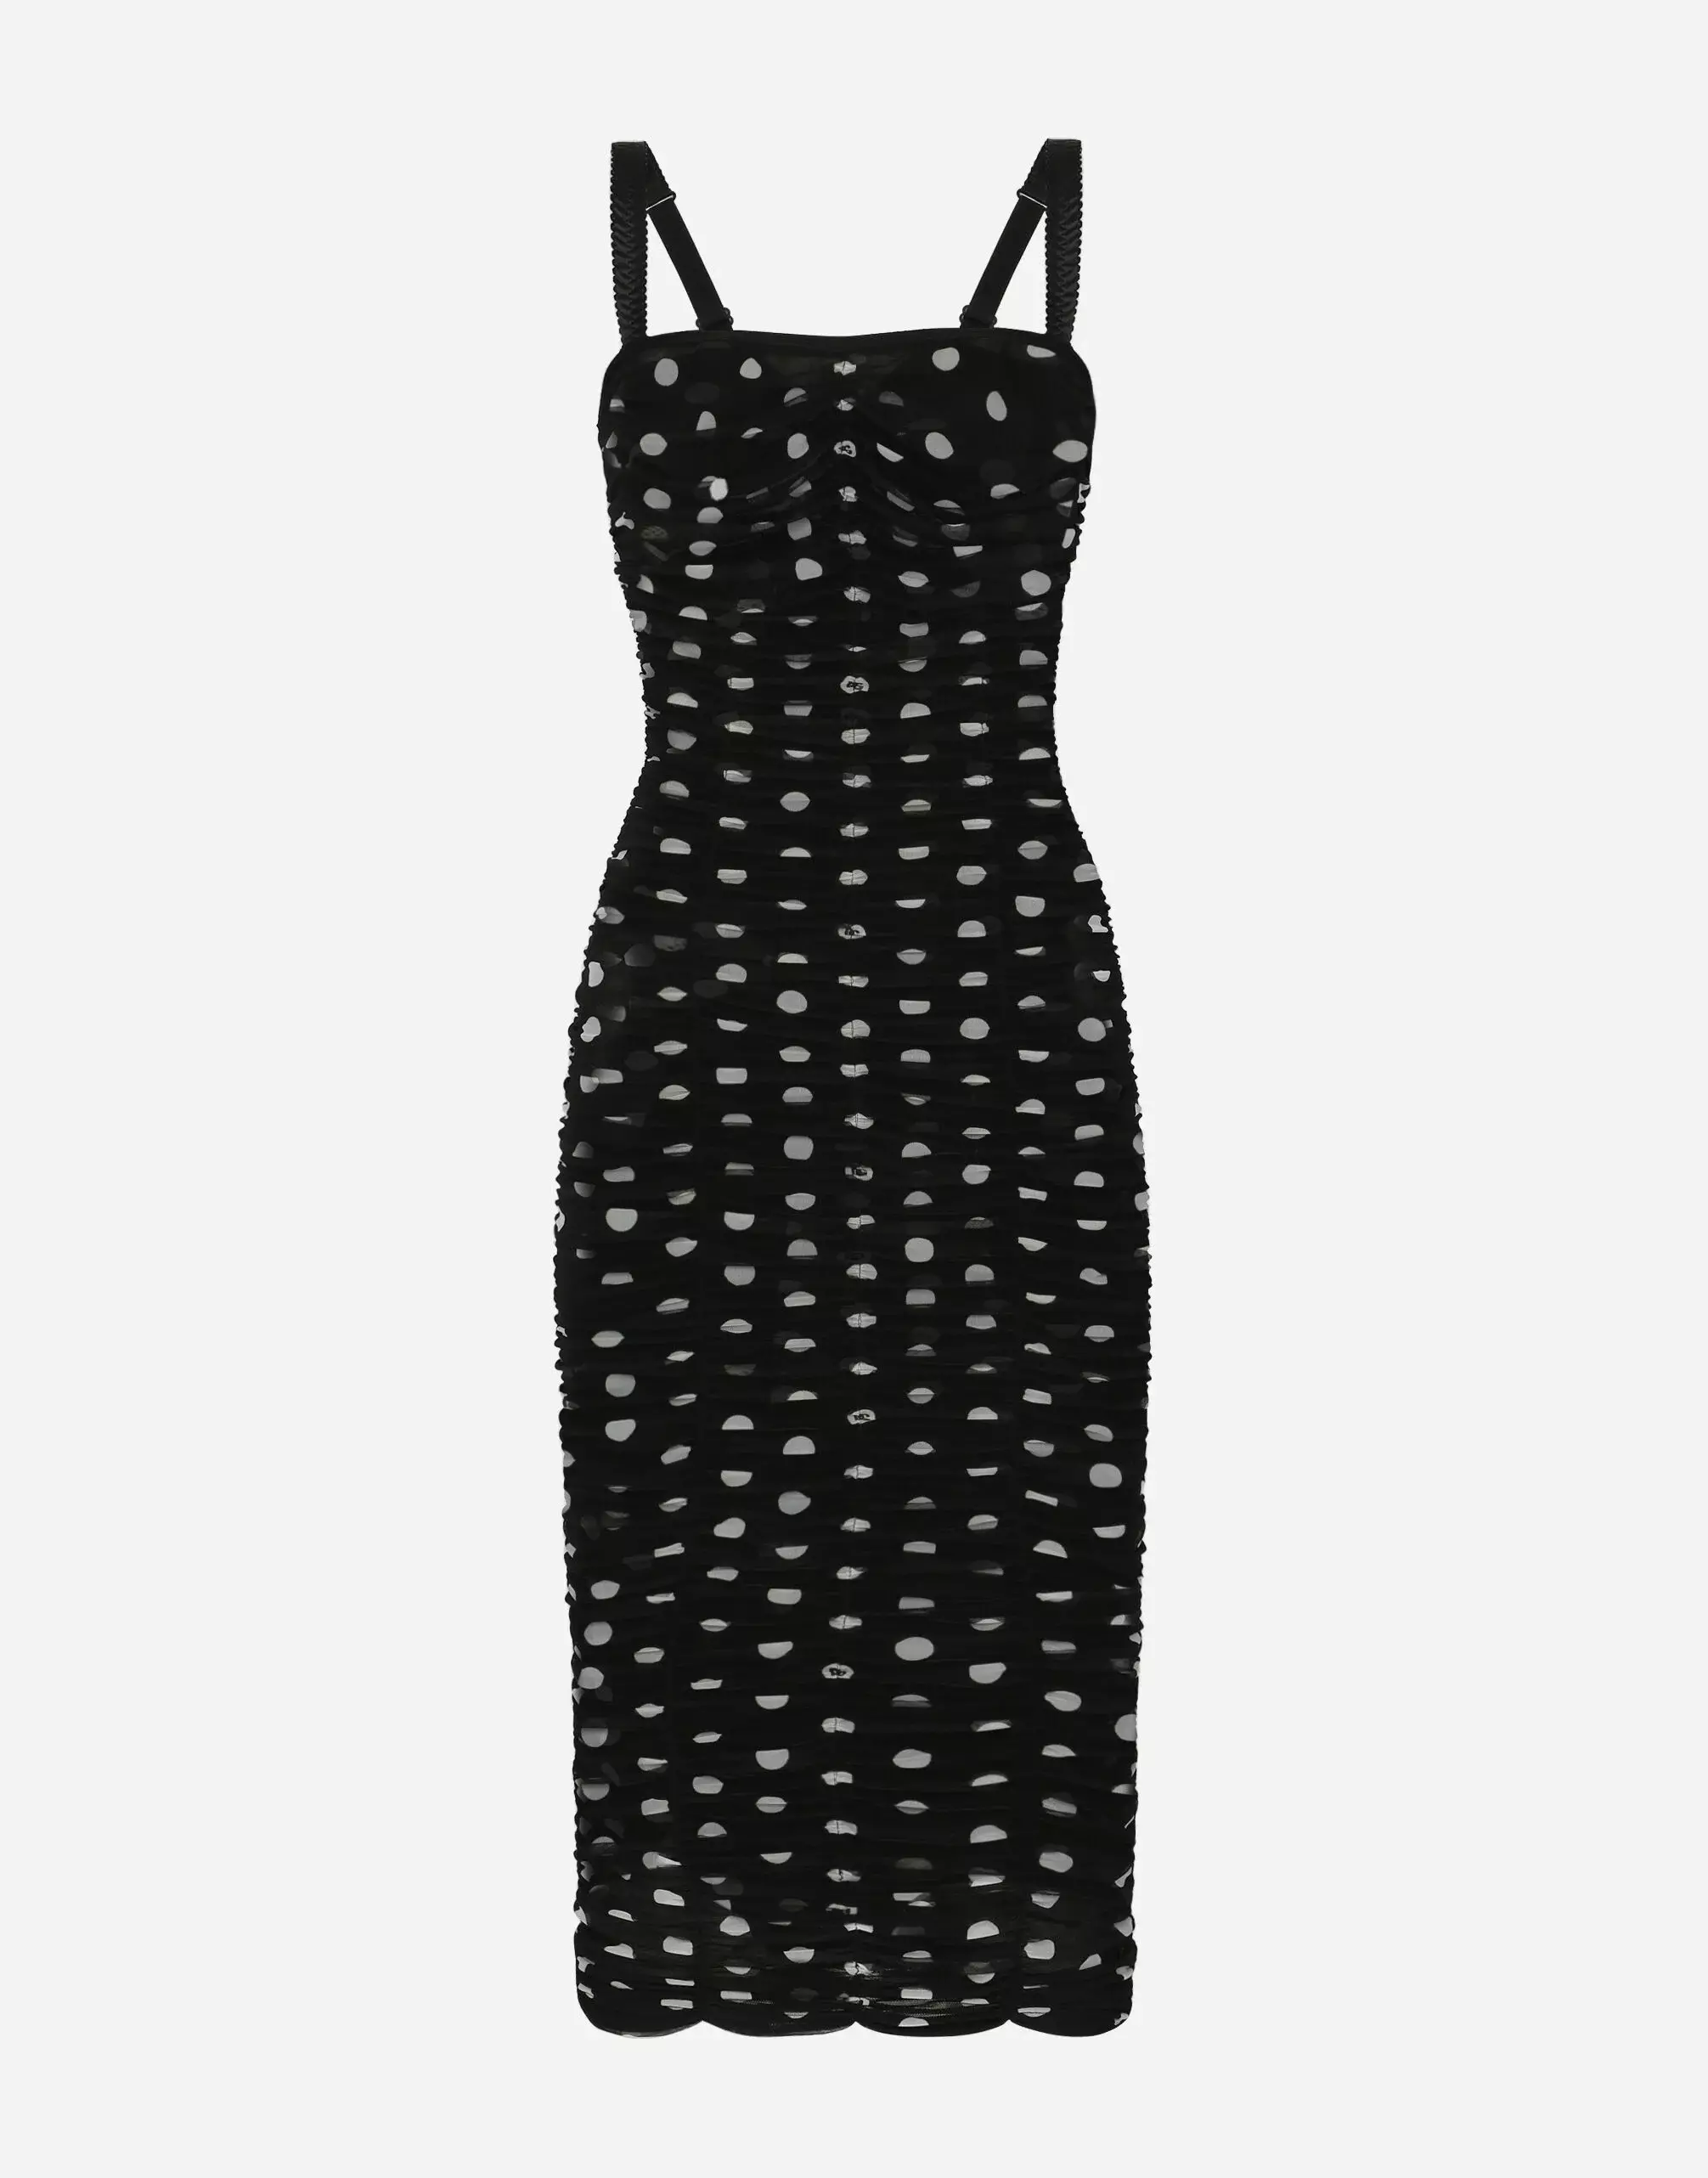 Dolce Gabbana Tulle Calf Length Sheath Dress With Draping And Polka Dot Print